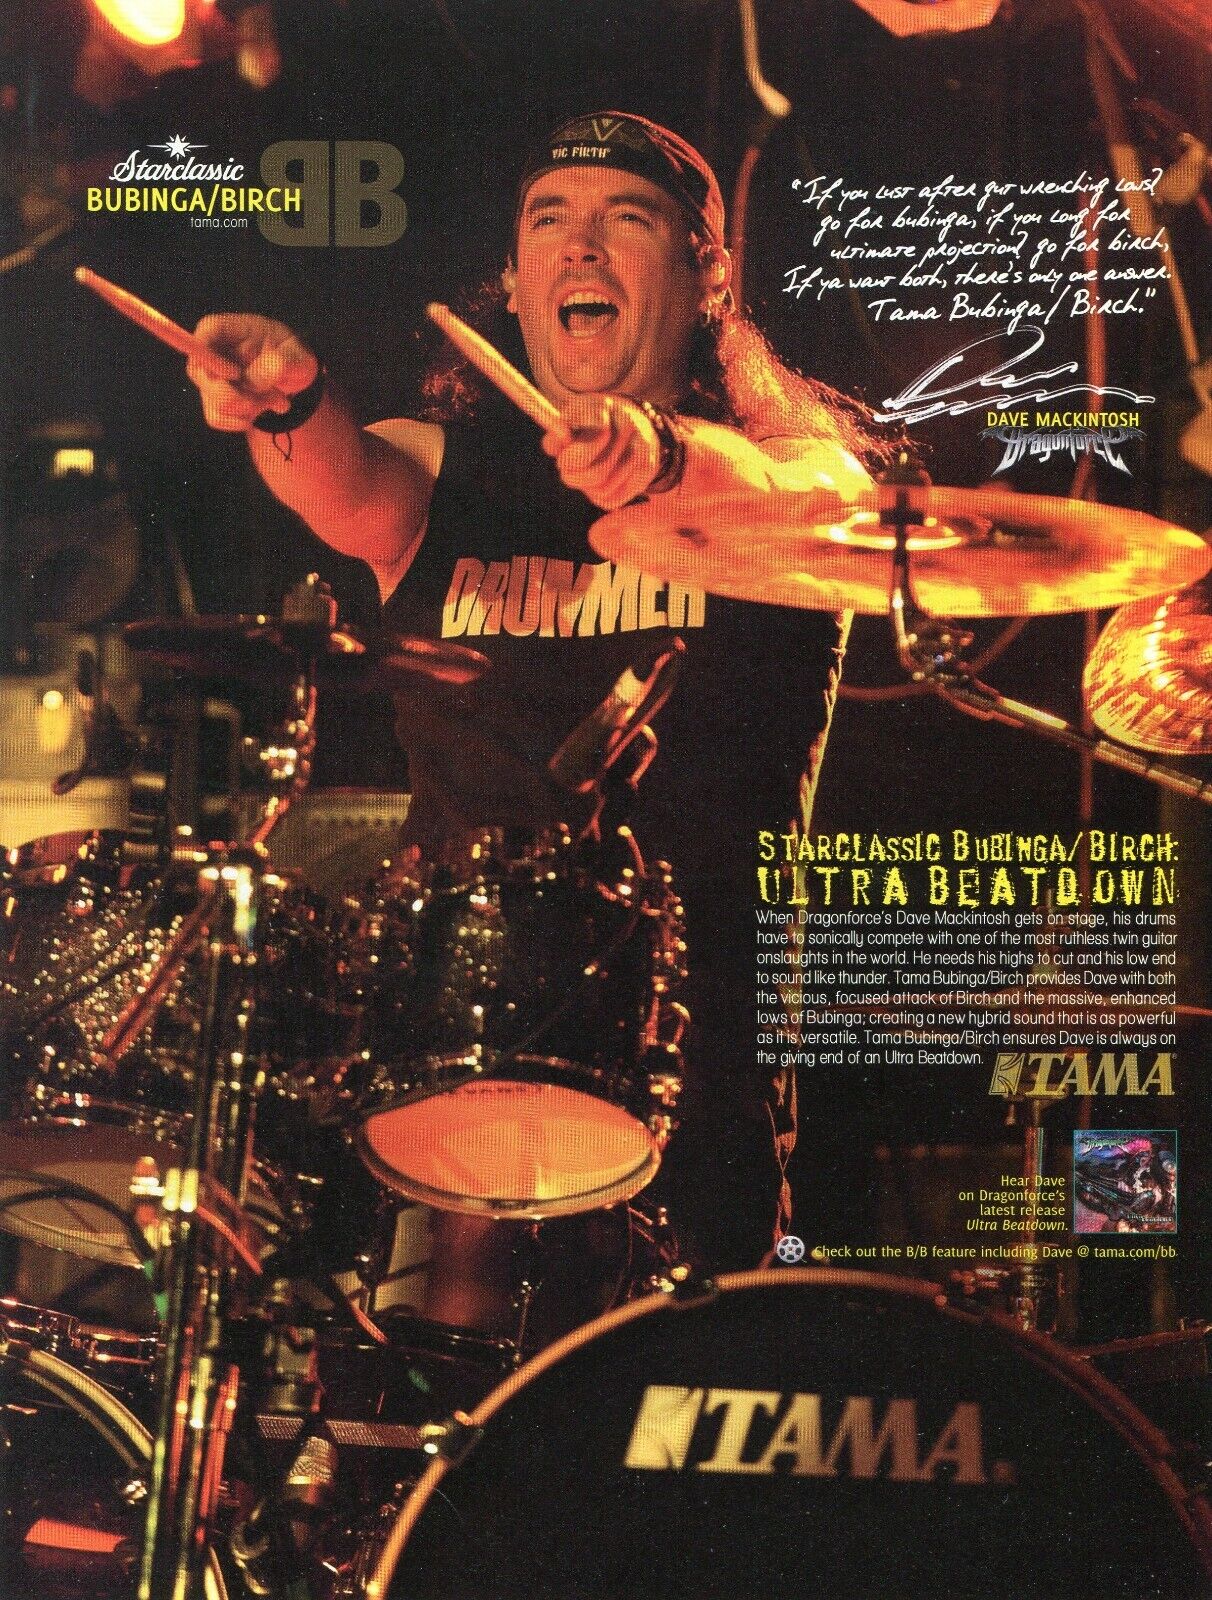 2009 Print Ad Tama Drums Starclassic Bubinga Birch w Dave Mackintosh Dragonforce